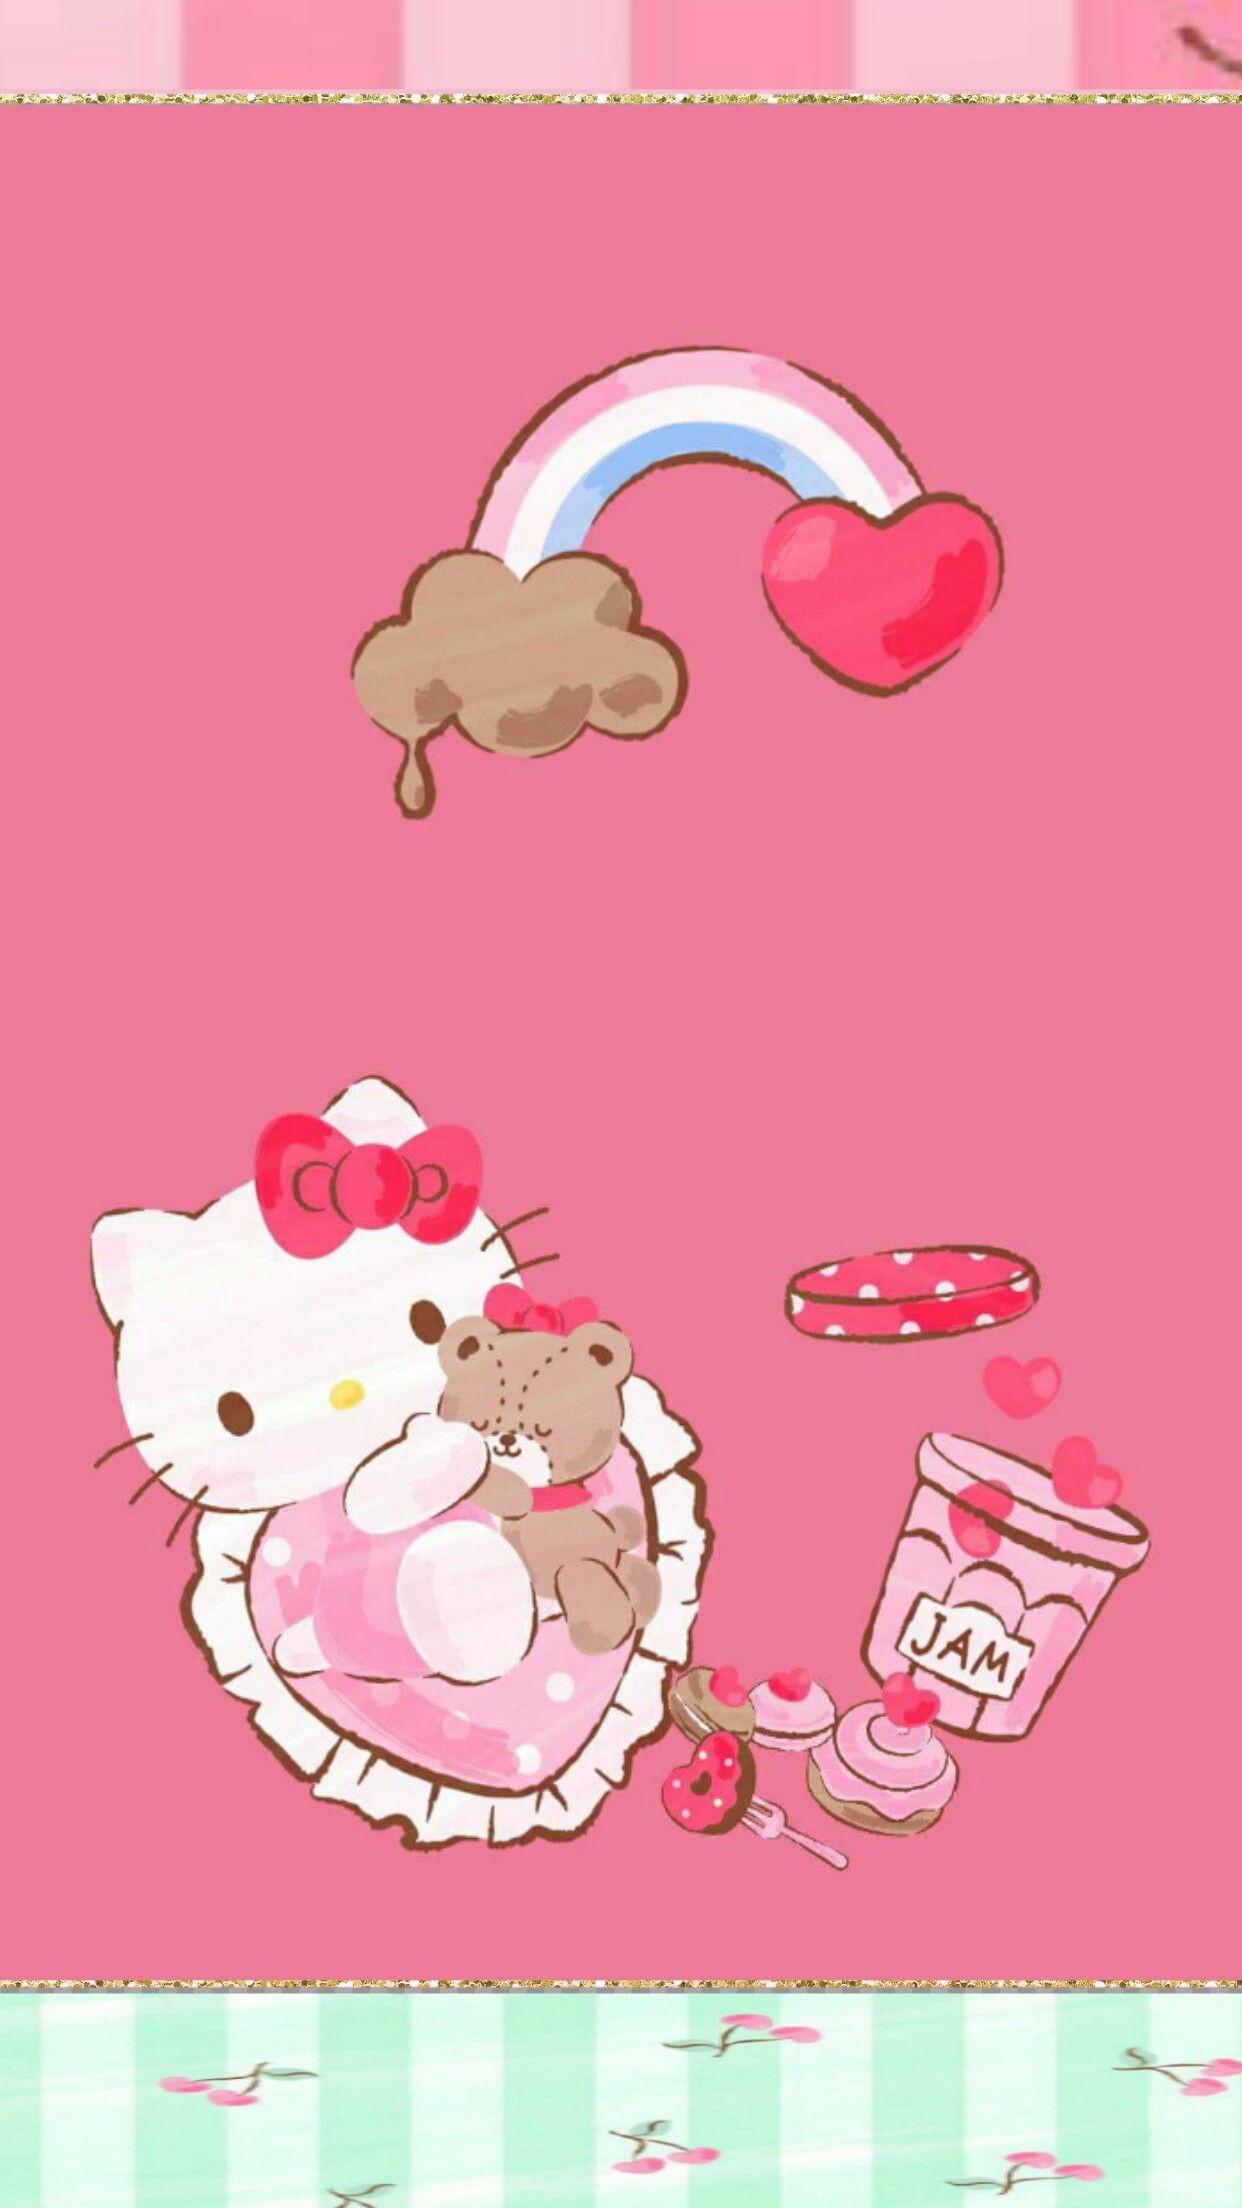 iPhone Wall: Valentine's Day tjn. Hello kitty wallpaper, Hello kitty picture, Hello kitty wallpaper free